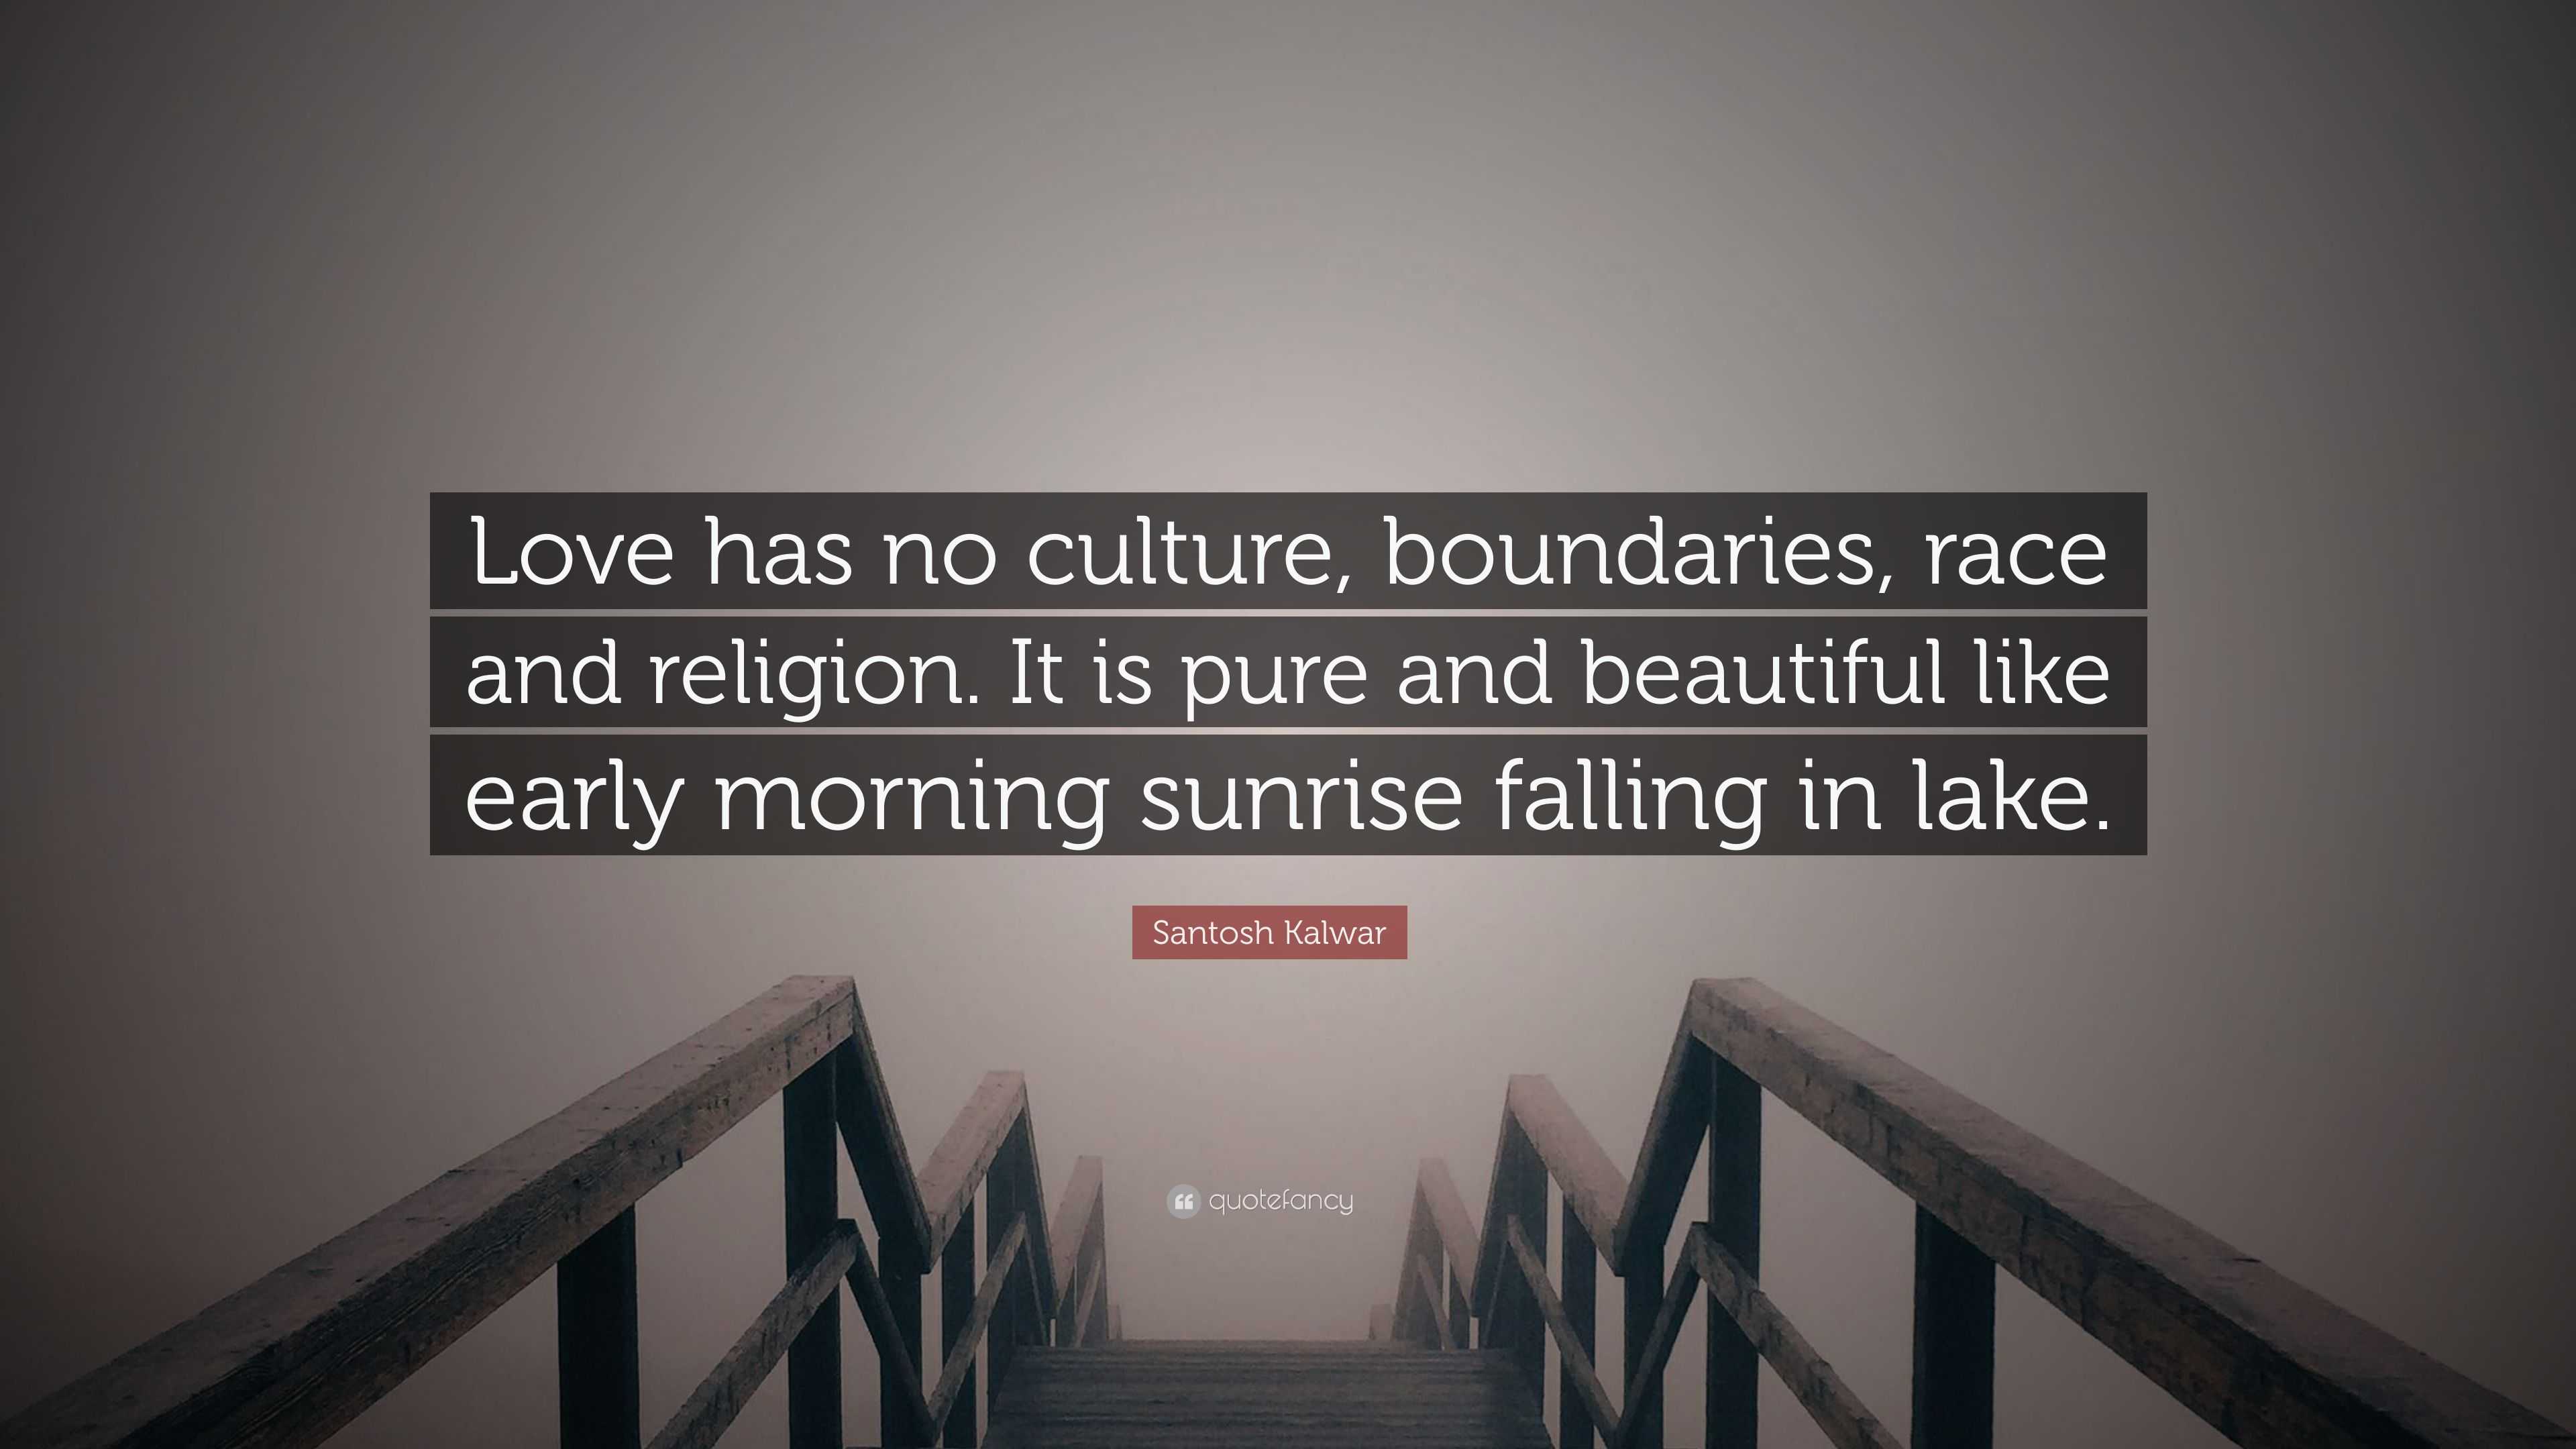 Santosh Kalwar Quote: “Love has no culture, boundaries, race and ...